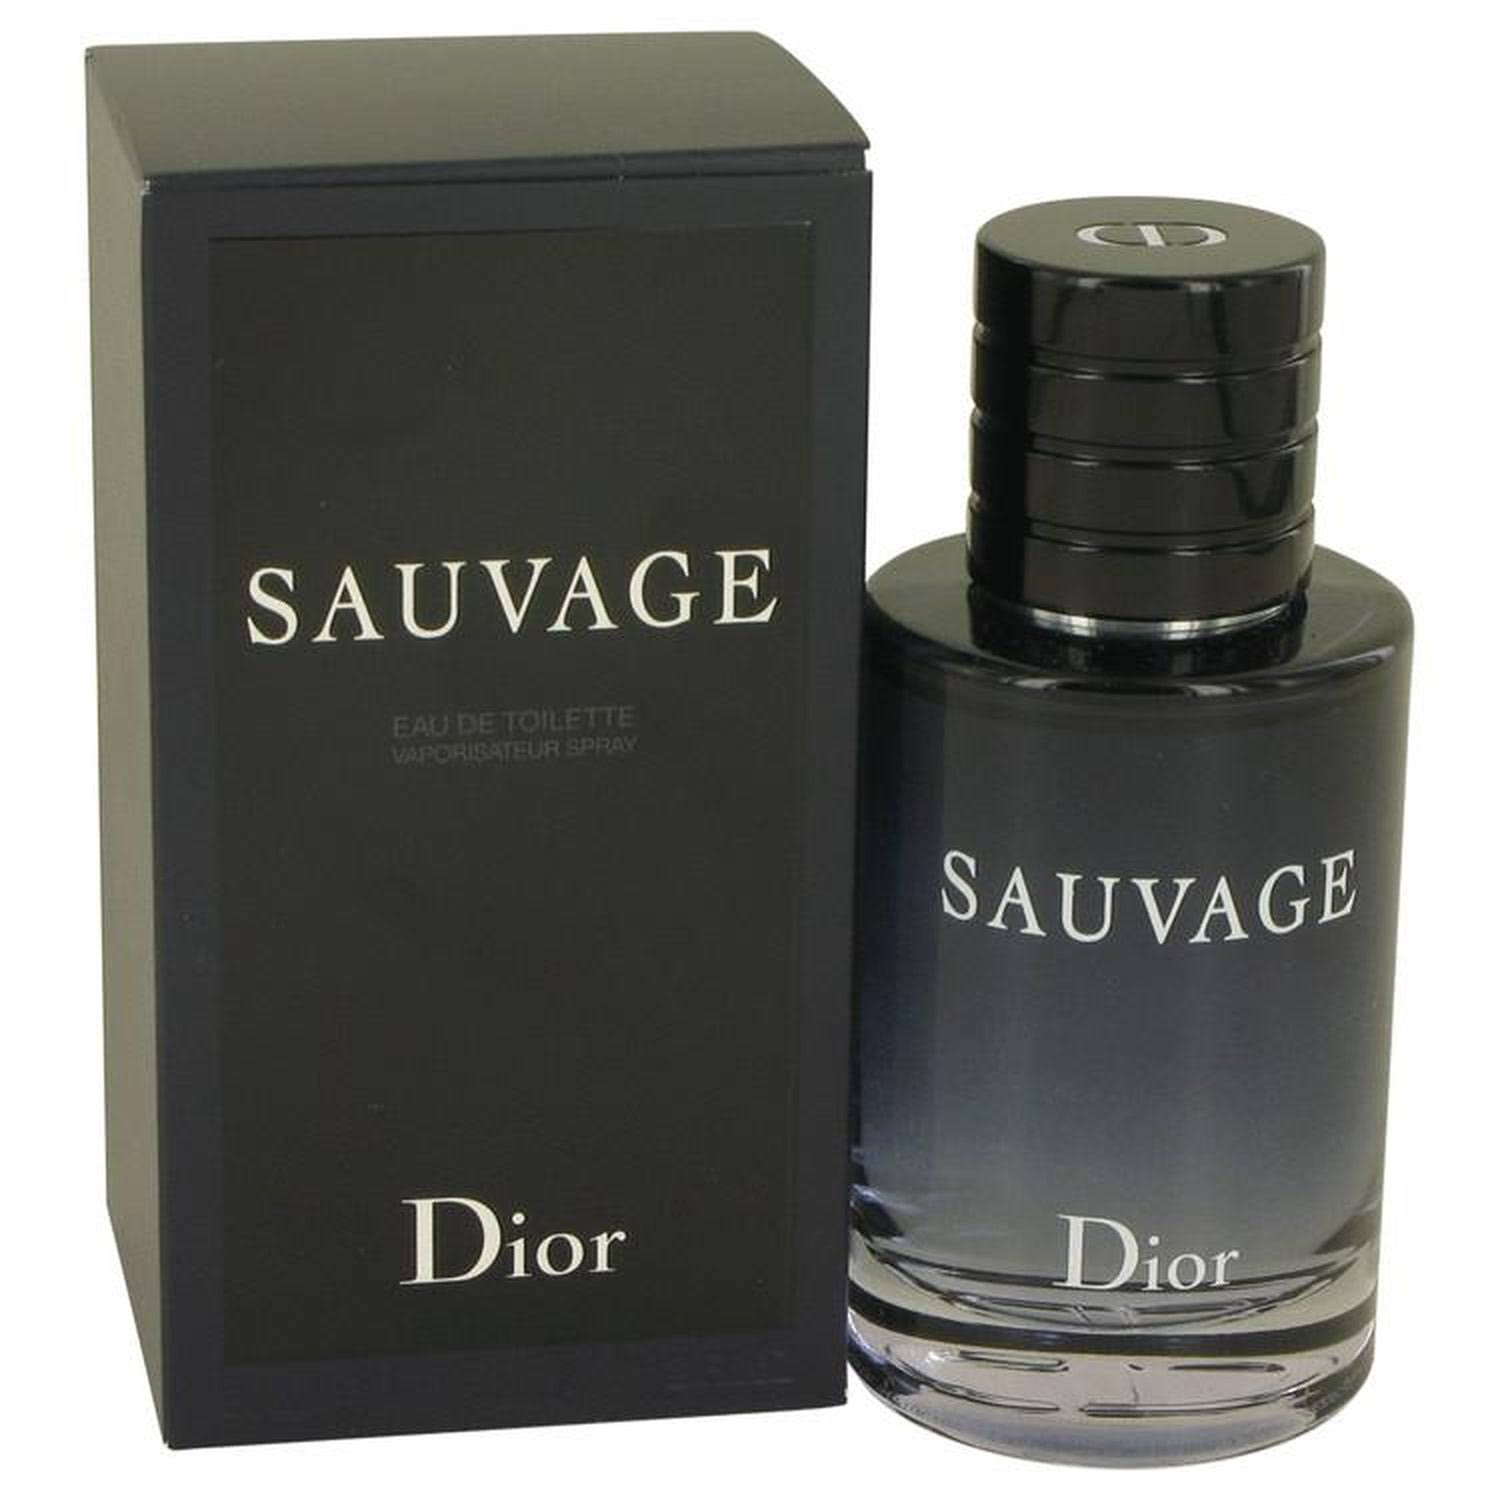 Dior Sauvage Eau de Toilette Spray - 60ml